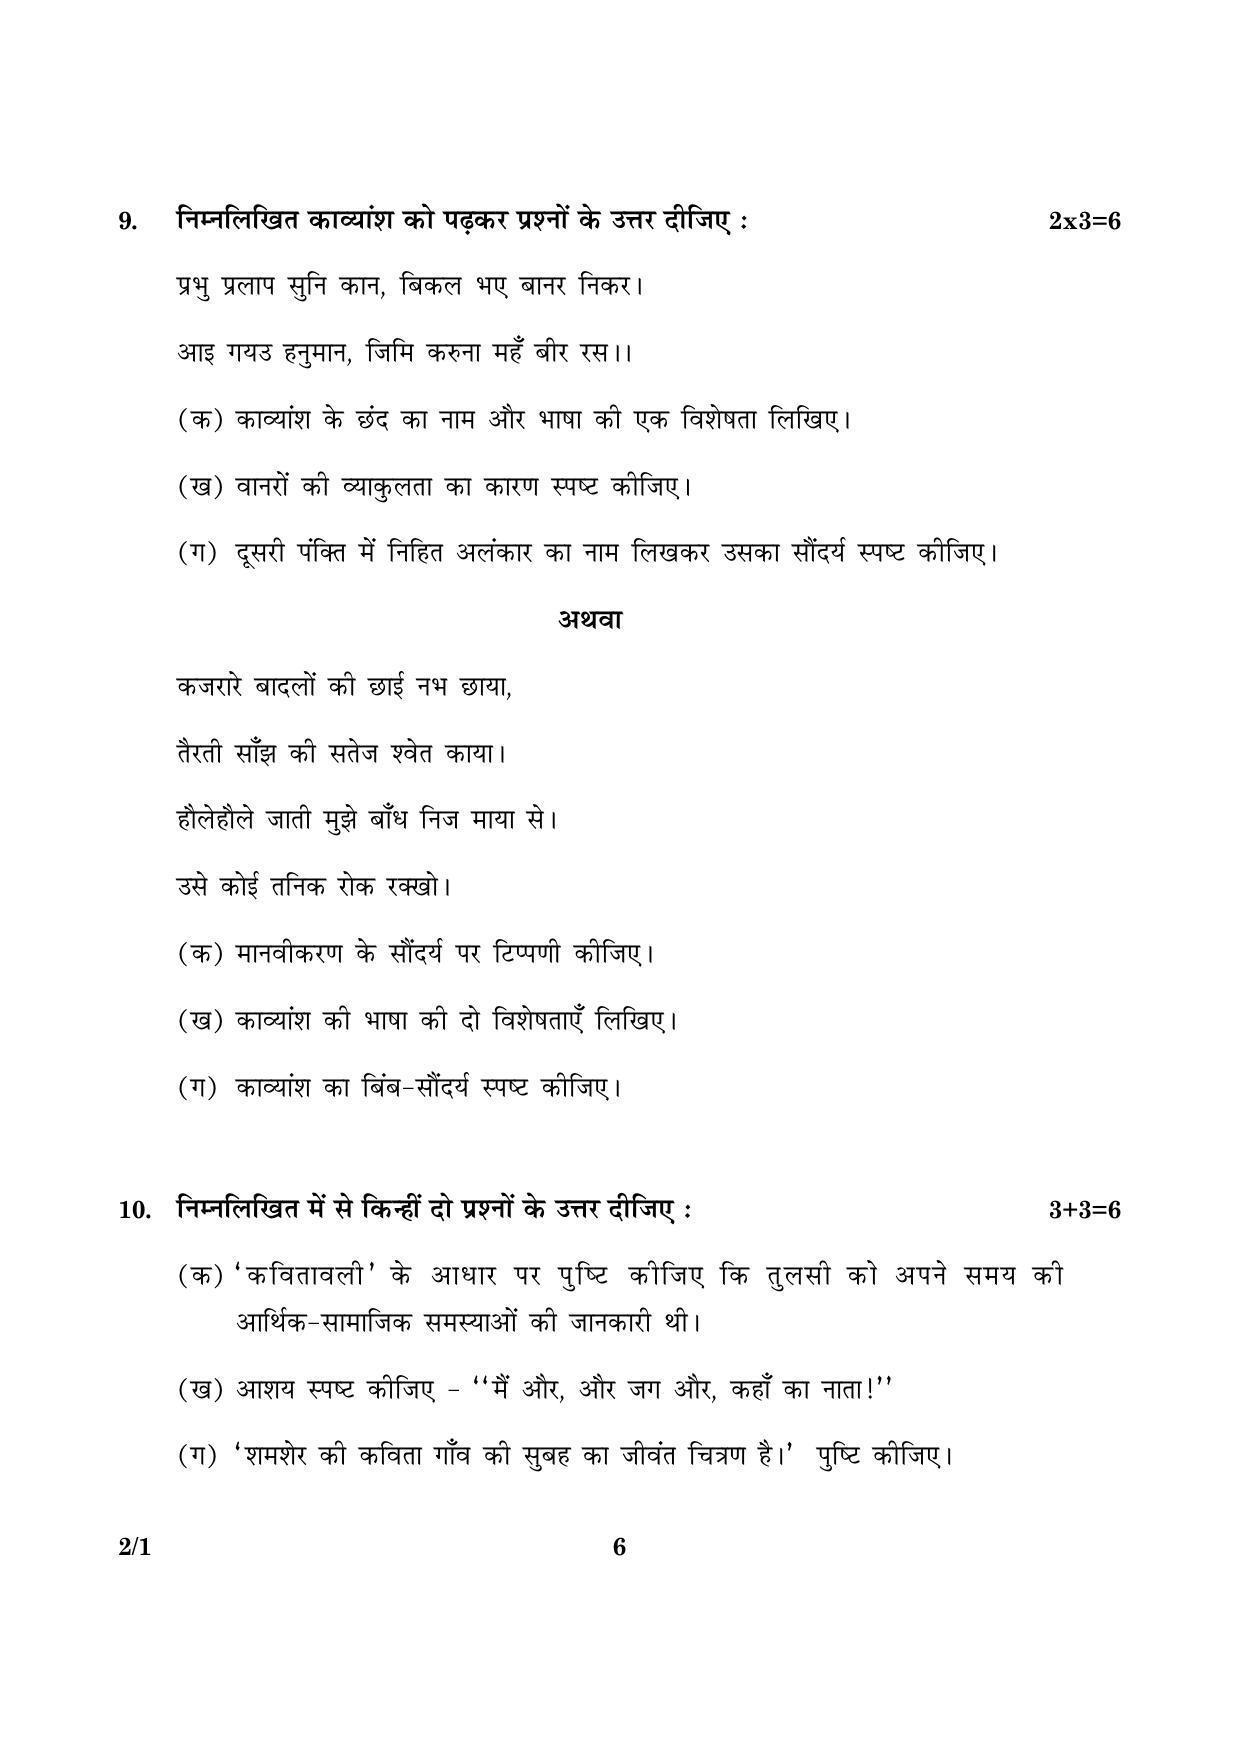 CBSE Class 12 002 Set 1 Hindi (Core) 2016 Question Paper - Page 6